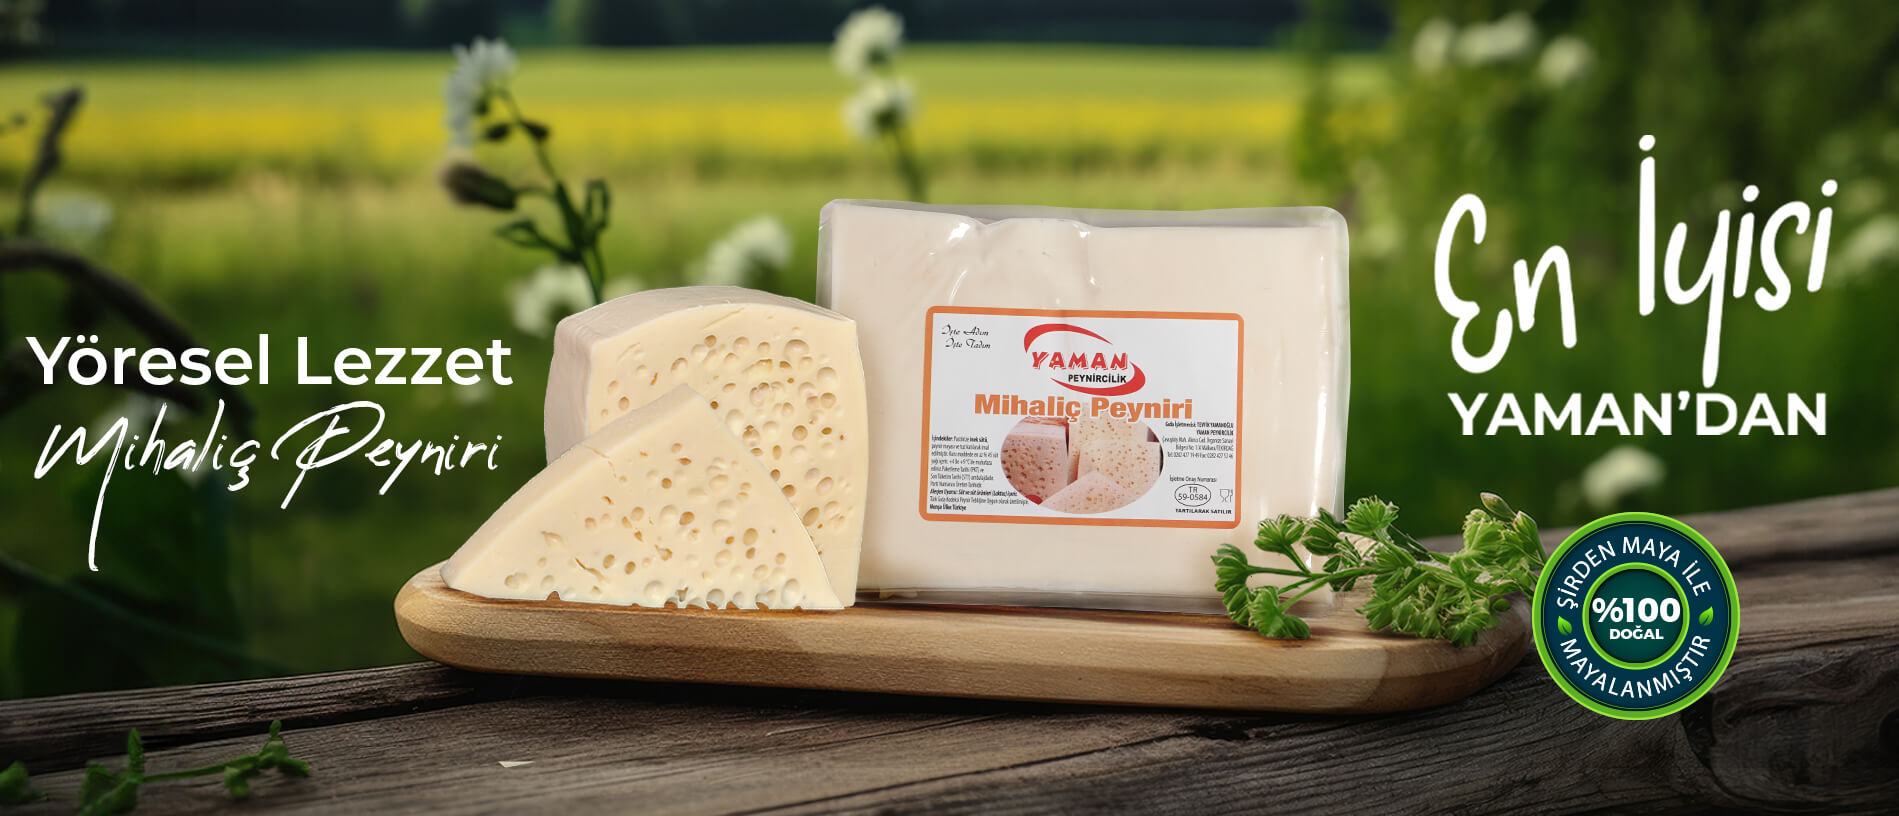 mihalic-peyniri-banner